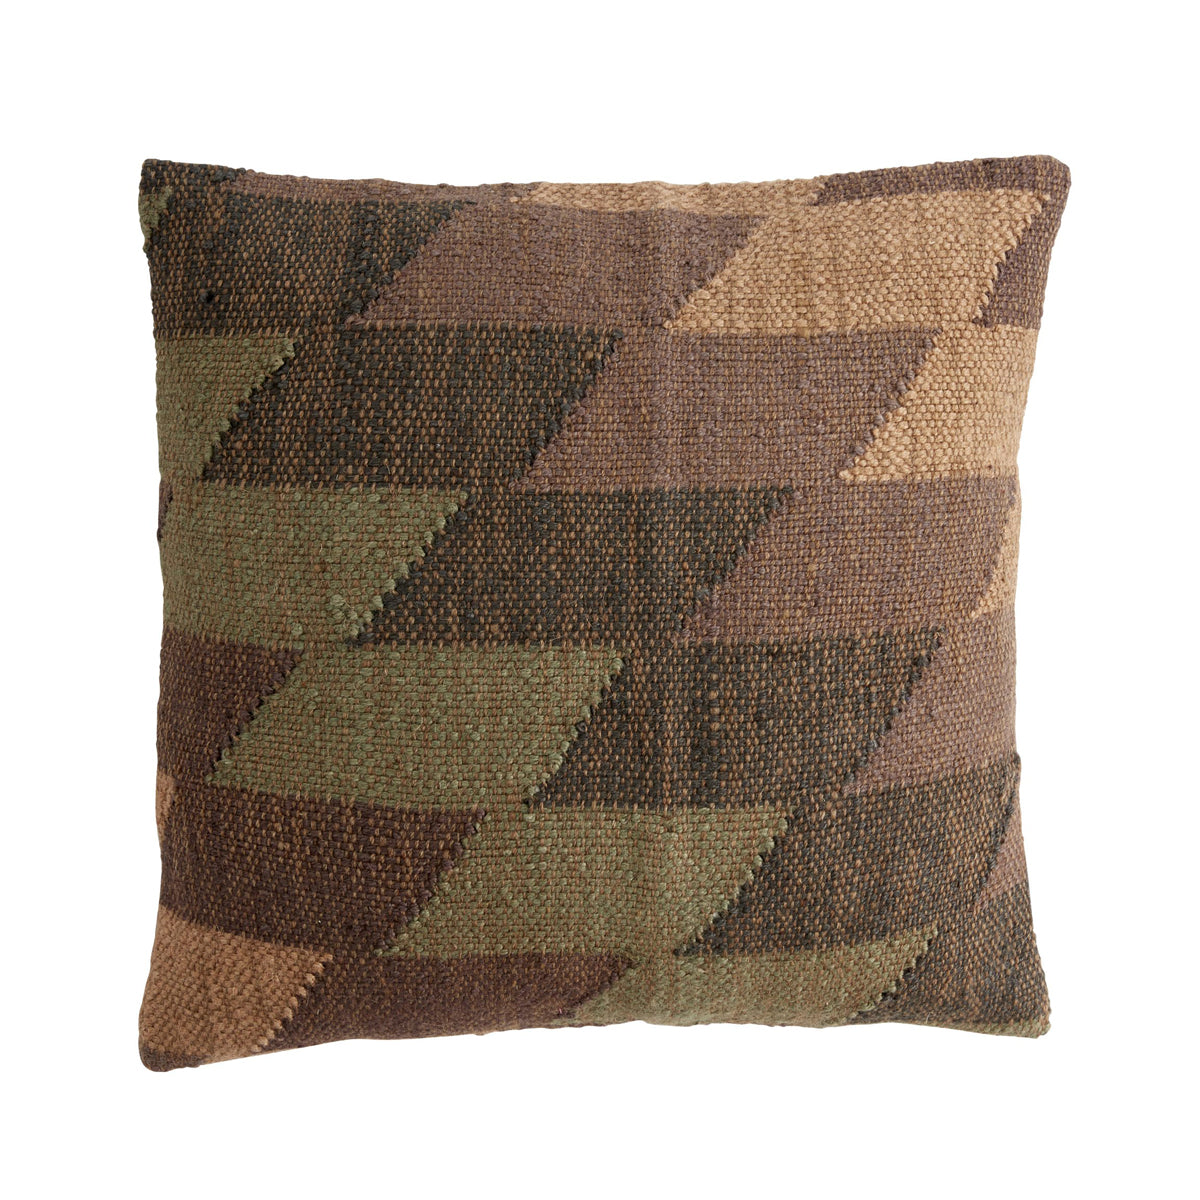 Kelim pattern cushion cover from Hübsch